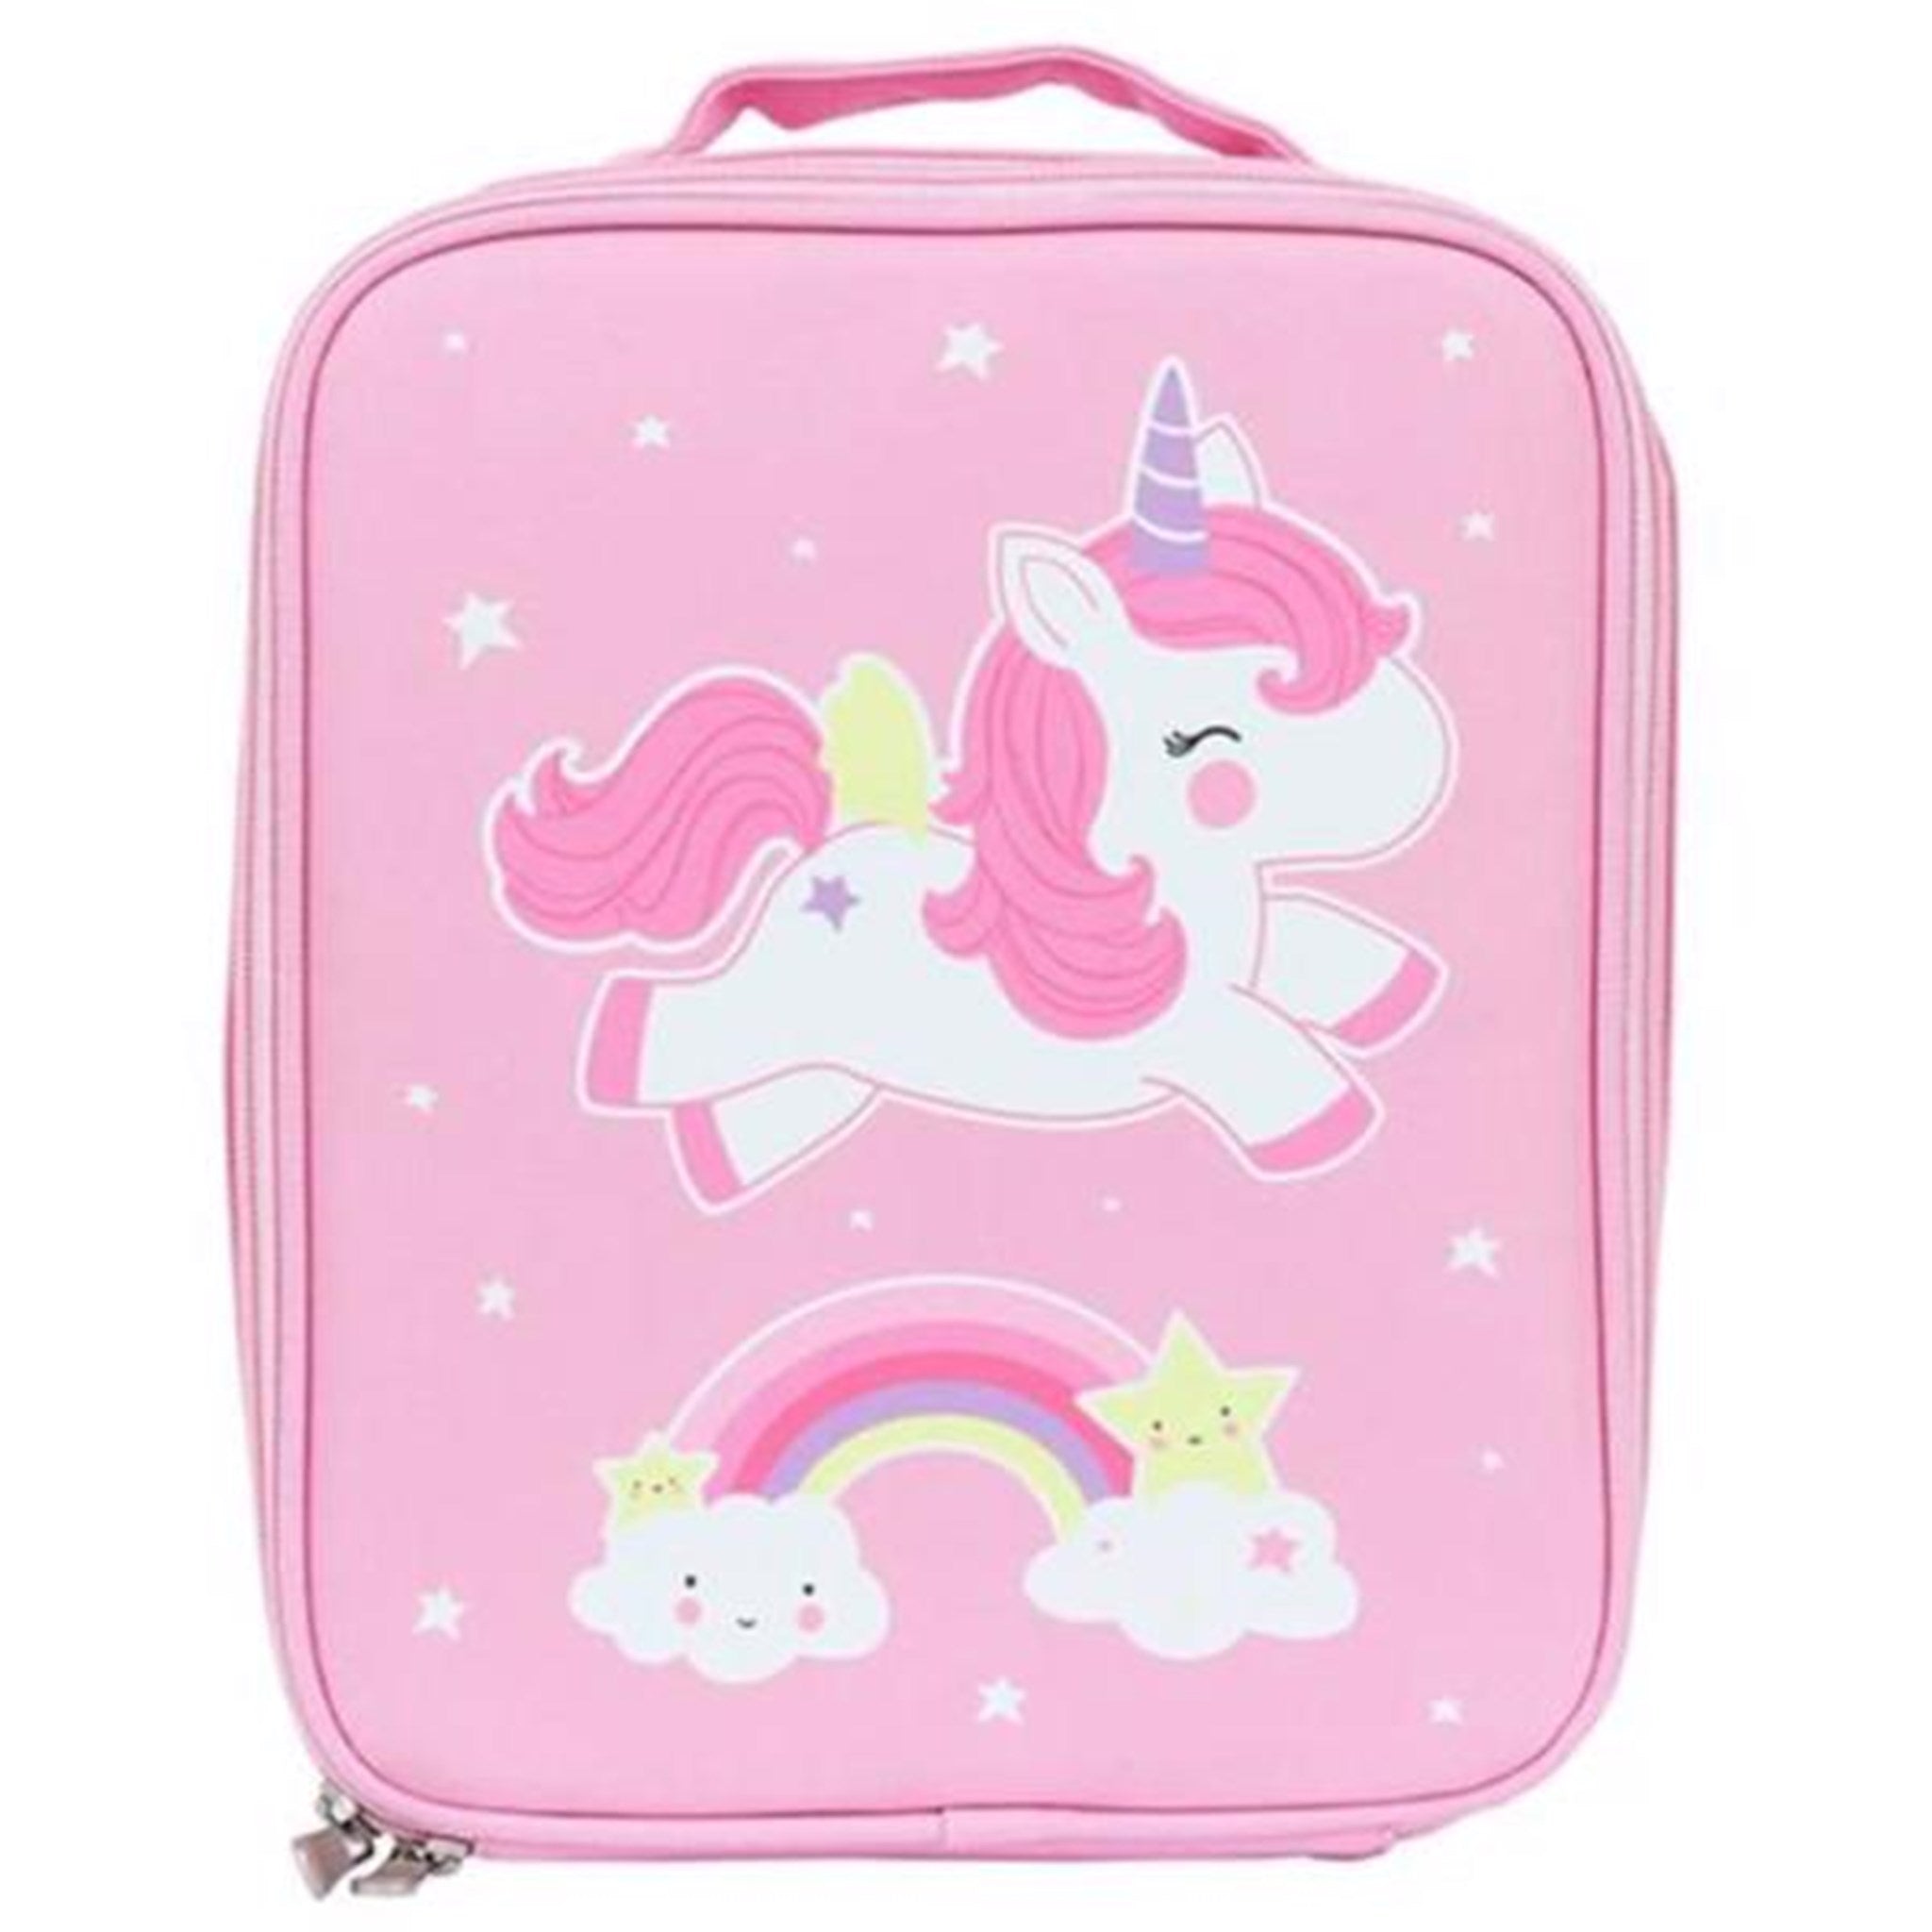 A Little Lovely Company Cool Bag Unicorn